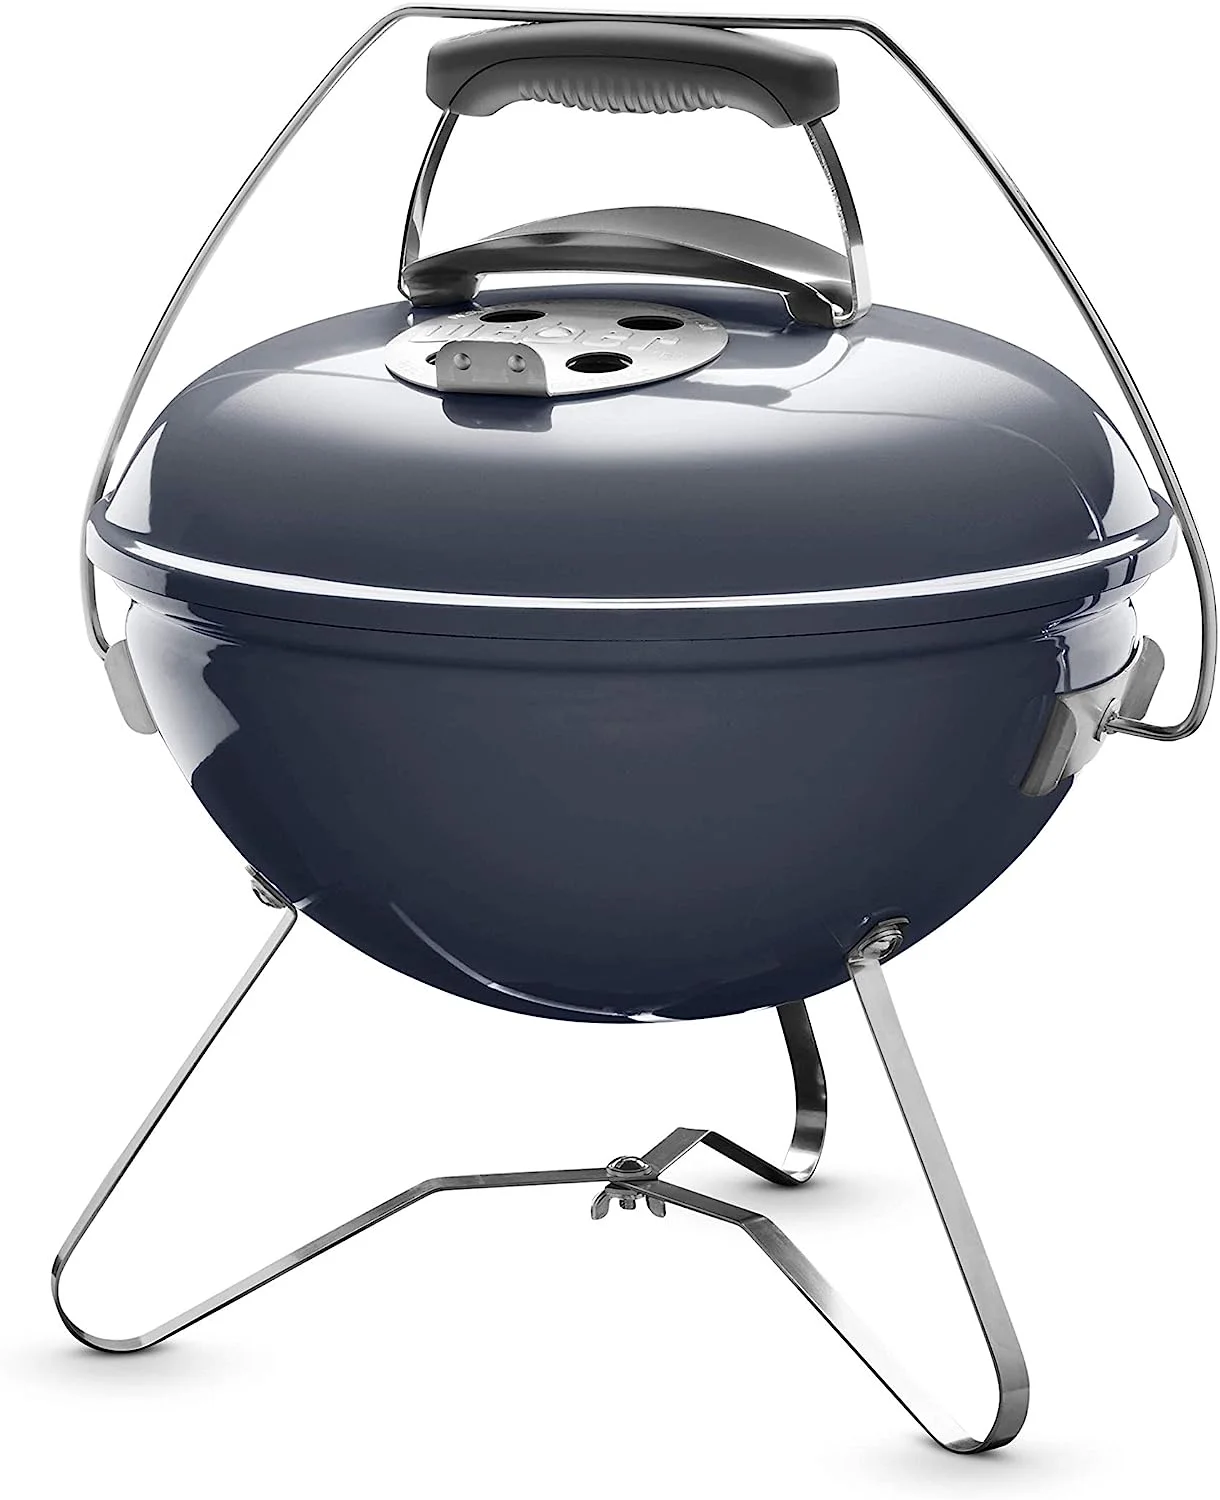 Image for Weber Smokey Joe Premium Charcoal Grill